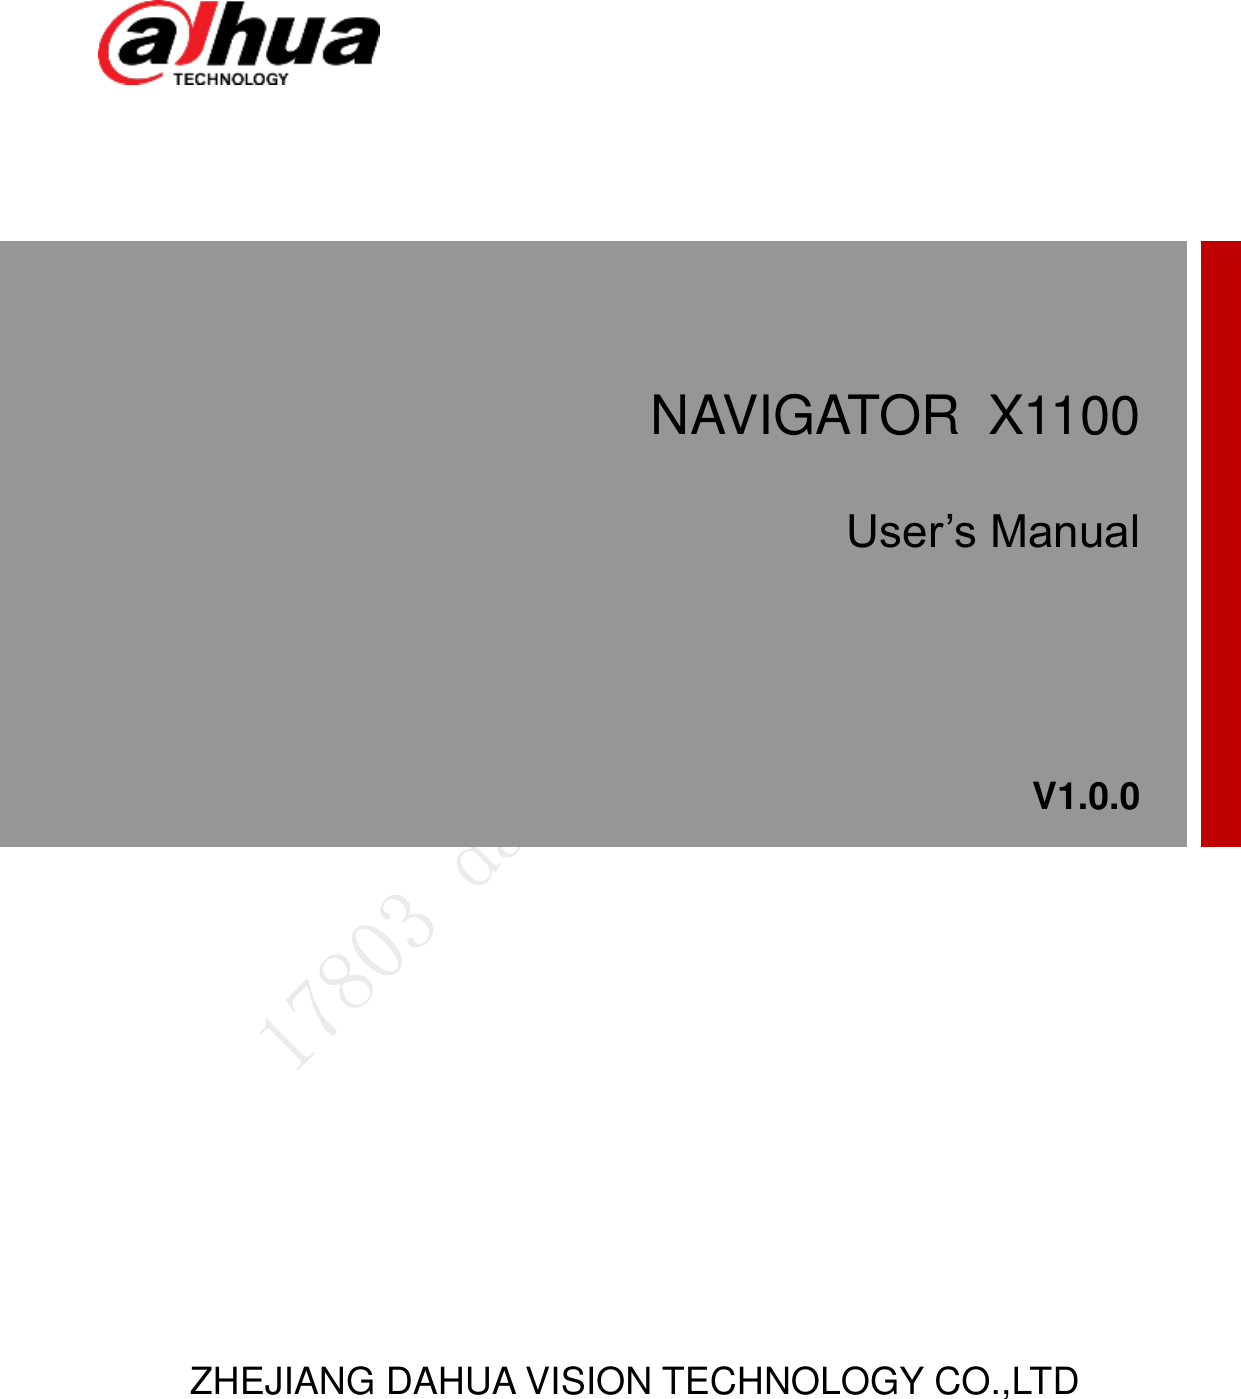         NAVIGATOR  X1100 User’s Manual V1.0.0 ZHEJIANG DAHUA VISION TECHNOLOGY CO.,LTD  